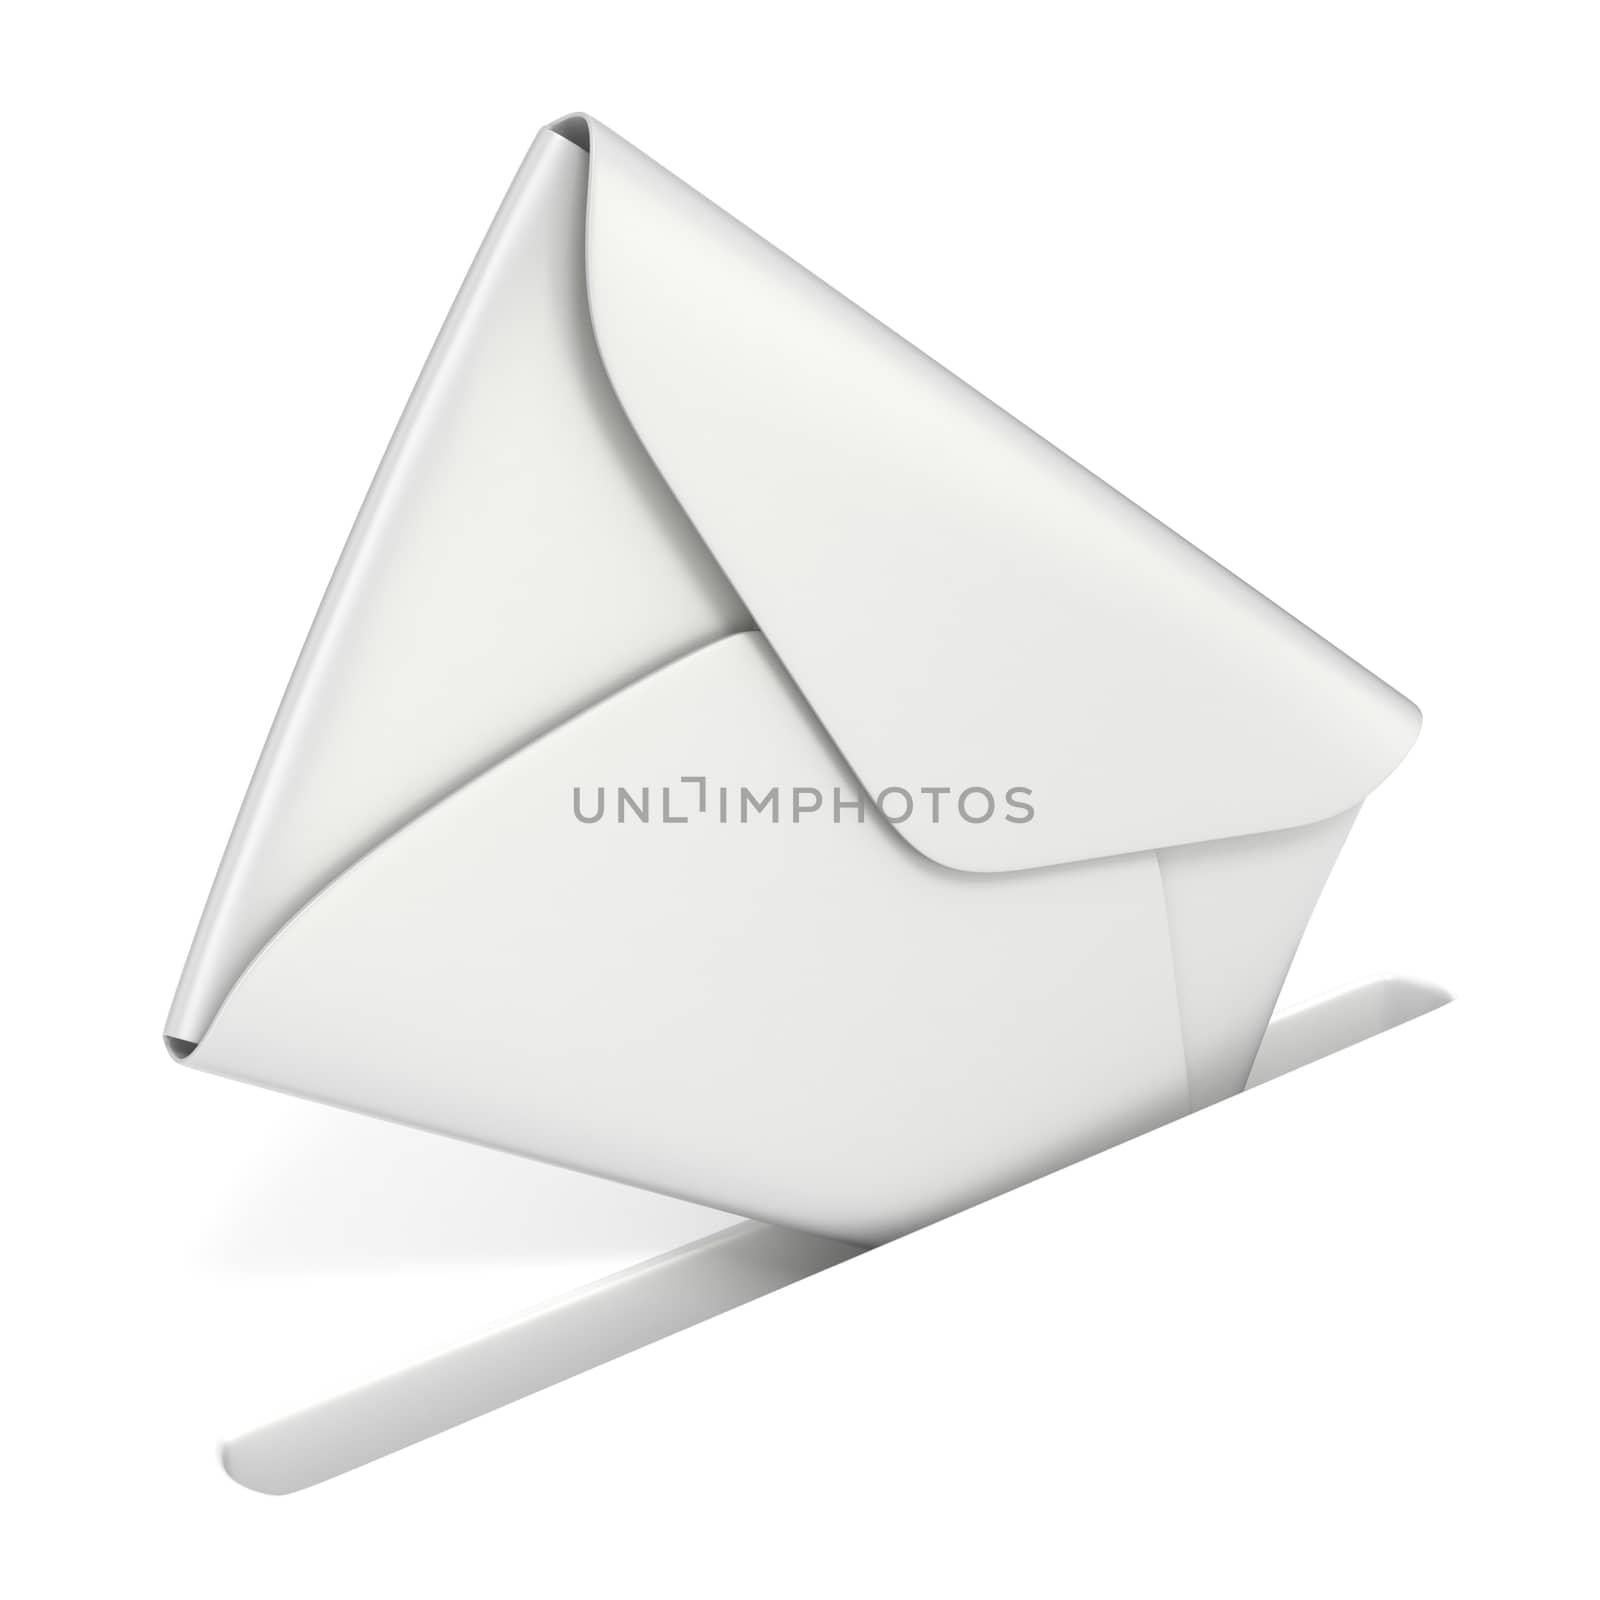 Blank white envelope falls into the slot. Sending mail concept 3D render illustration isolated on white background